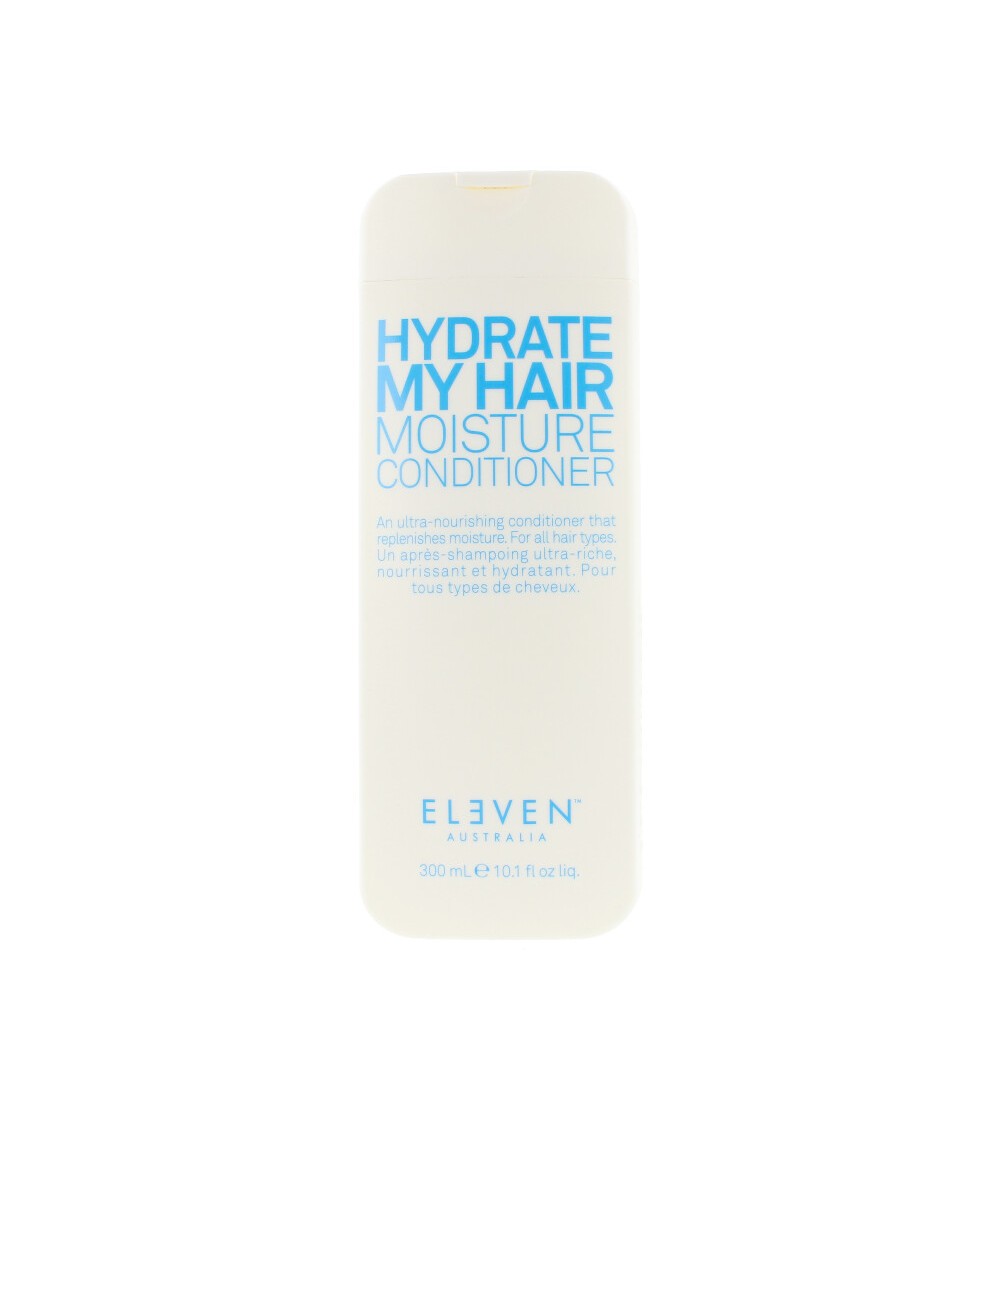 HYDRATE MY HAIR moisture conditioner 300 ml